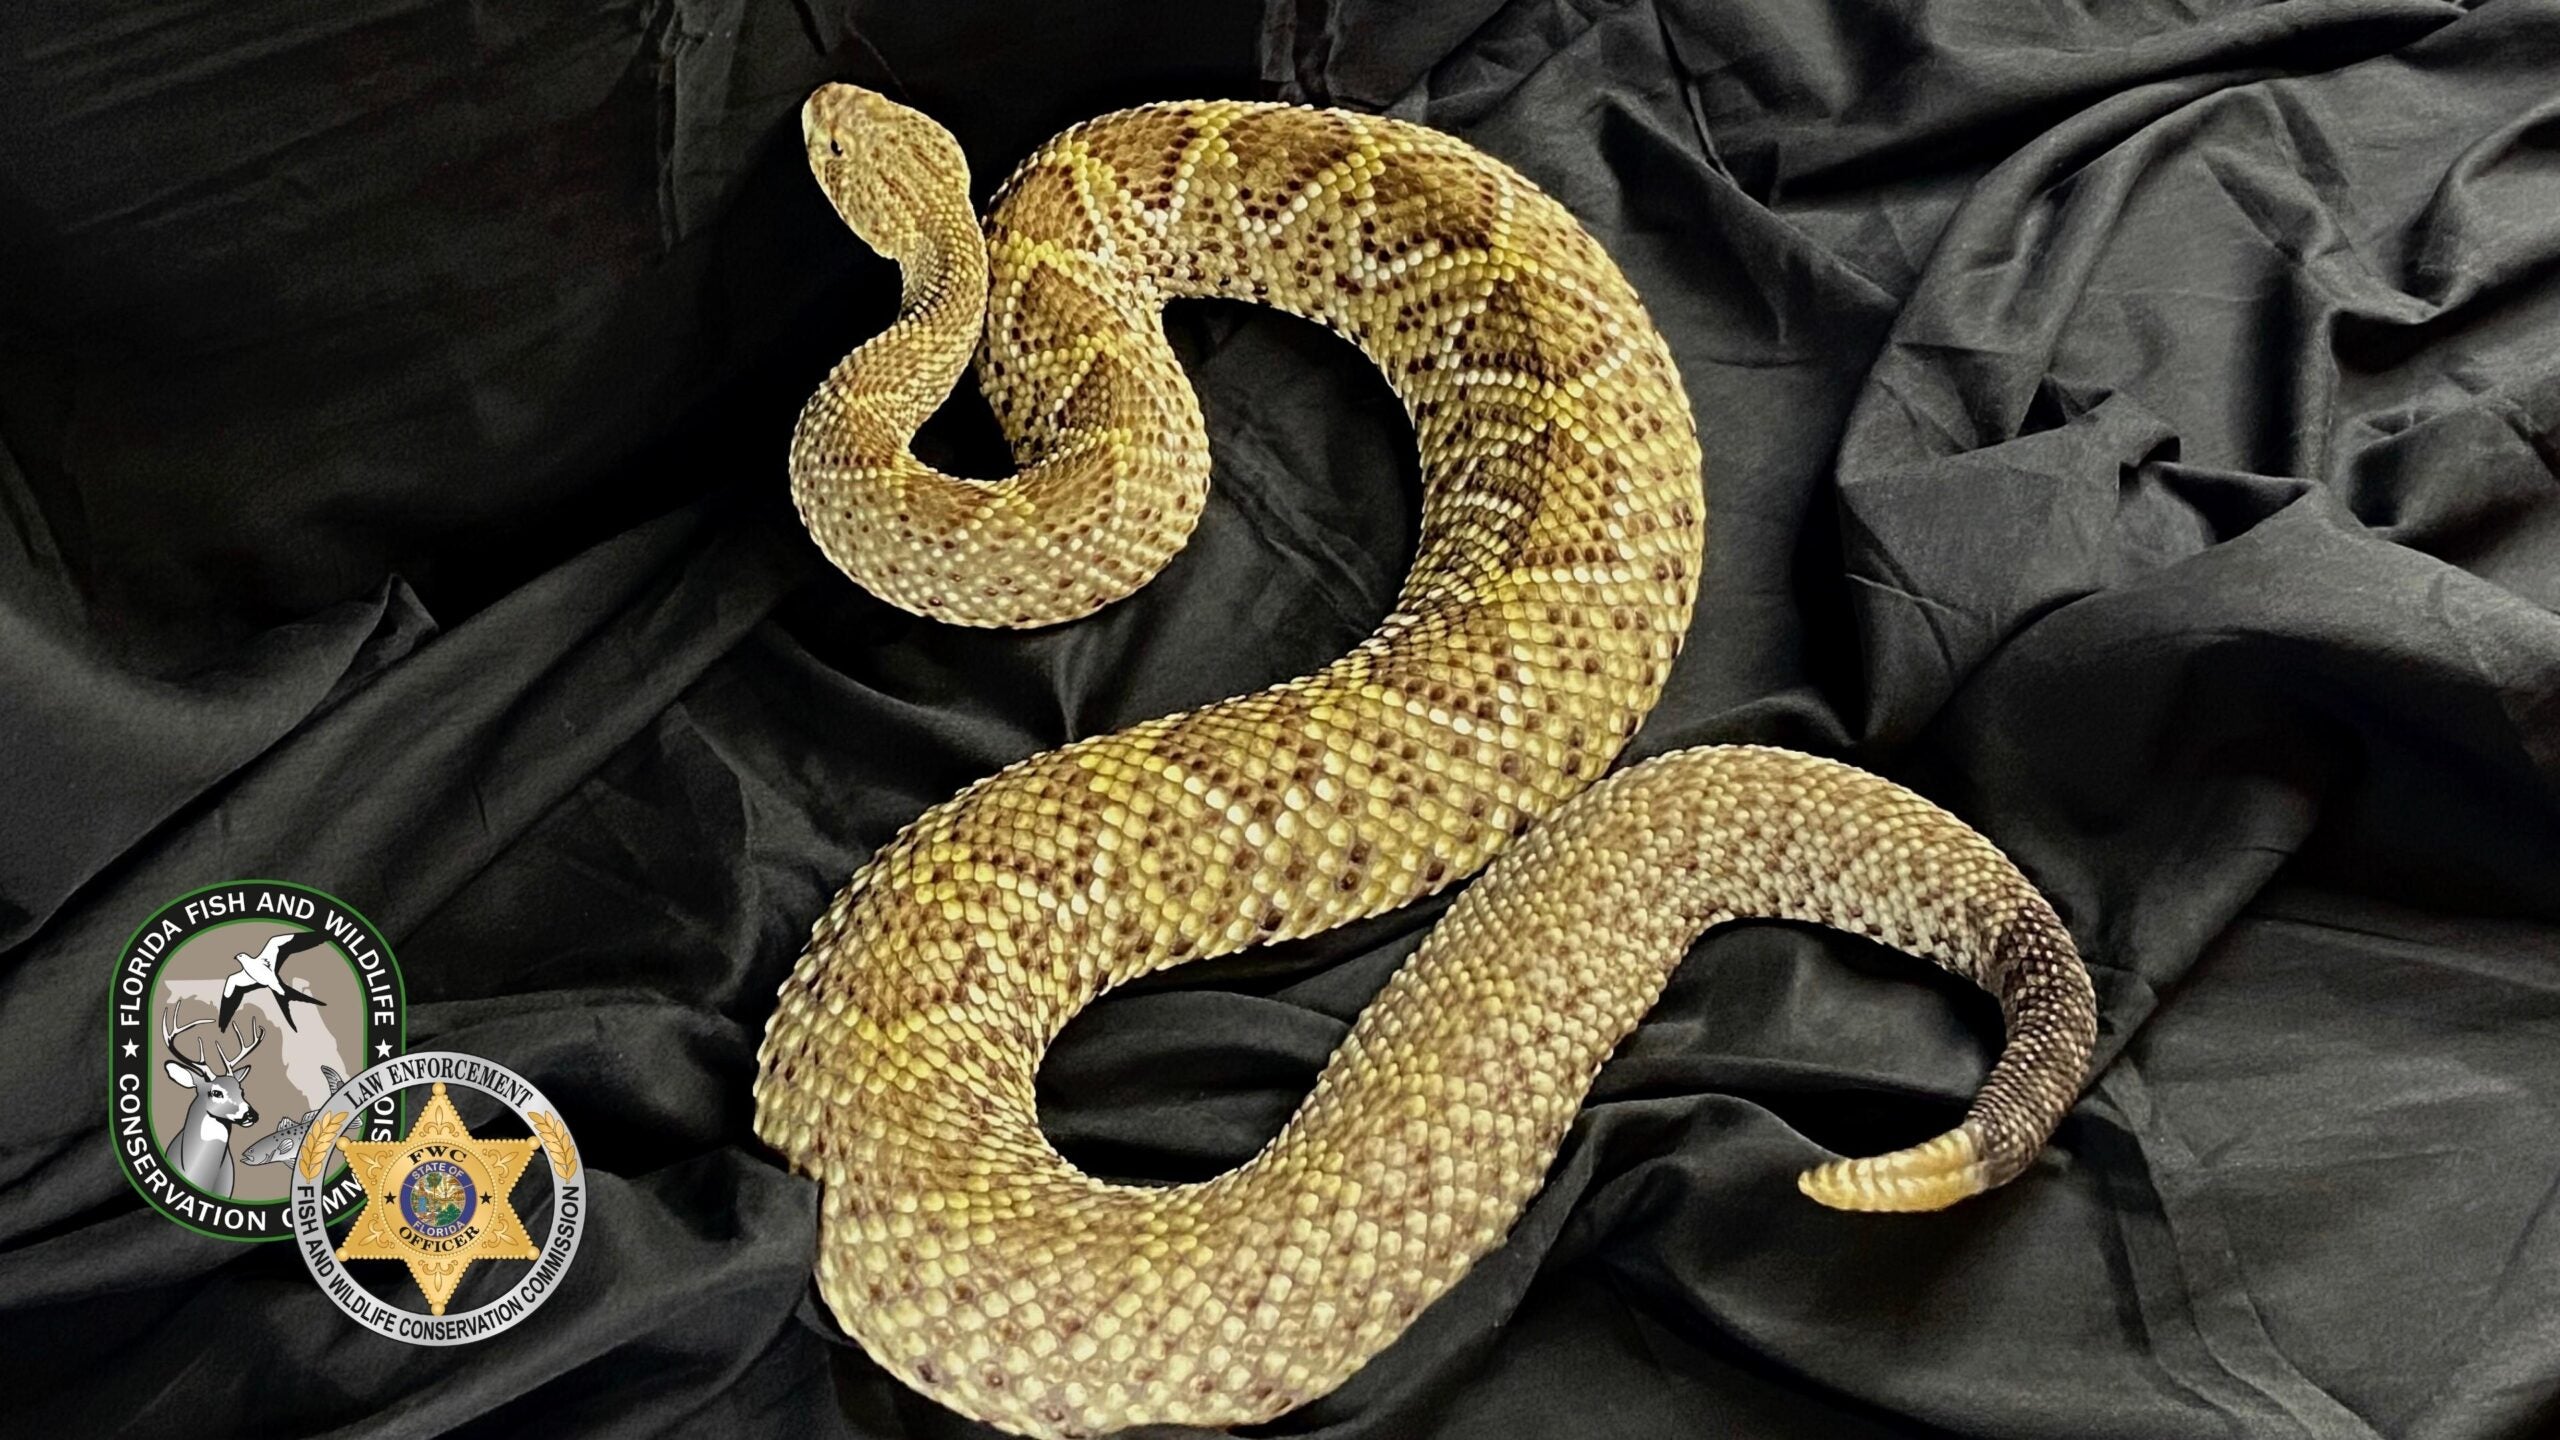 Huge Venomous Snake Trafficking Ring Busted in Florida